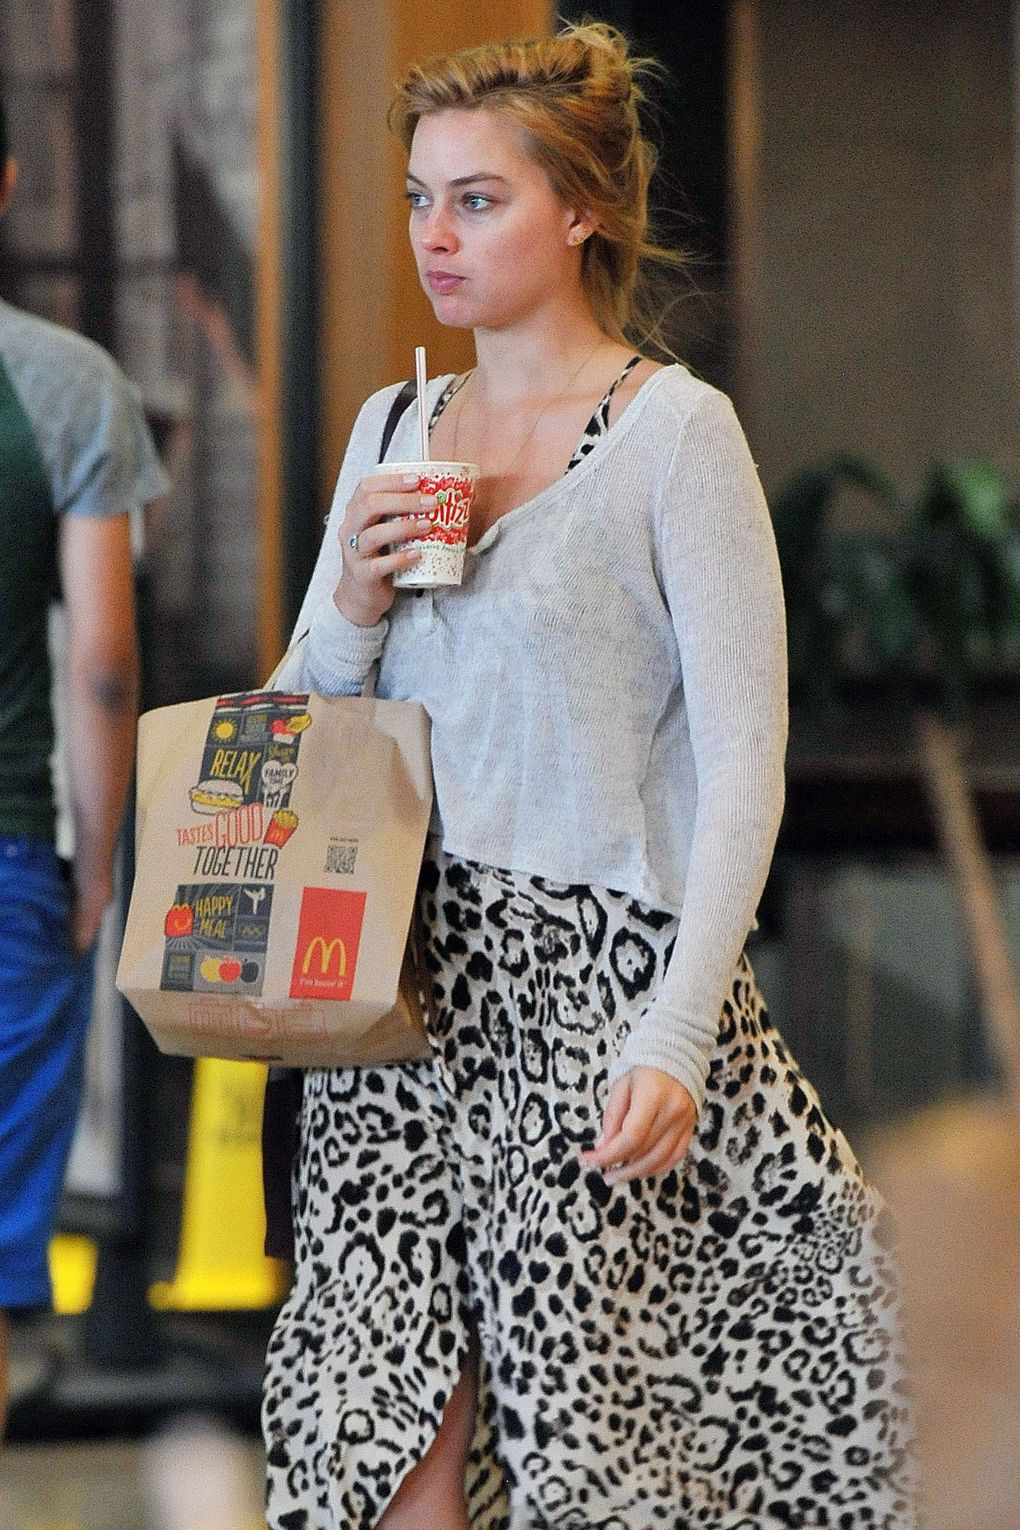 Margot Robbie buying fast food